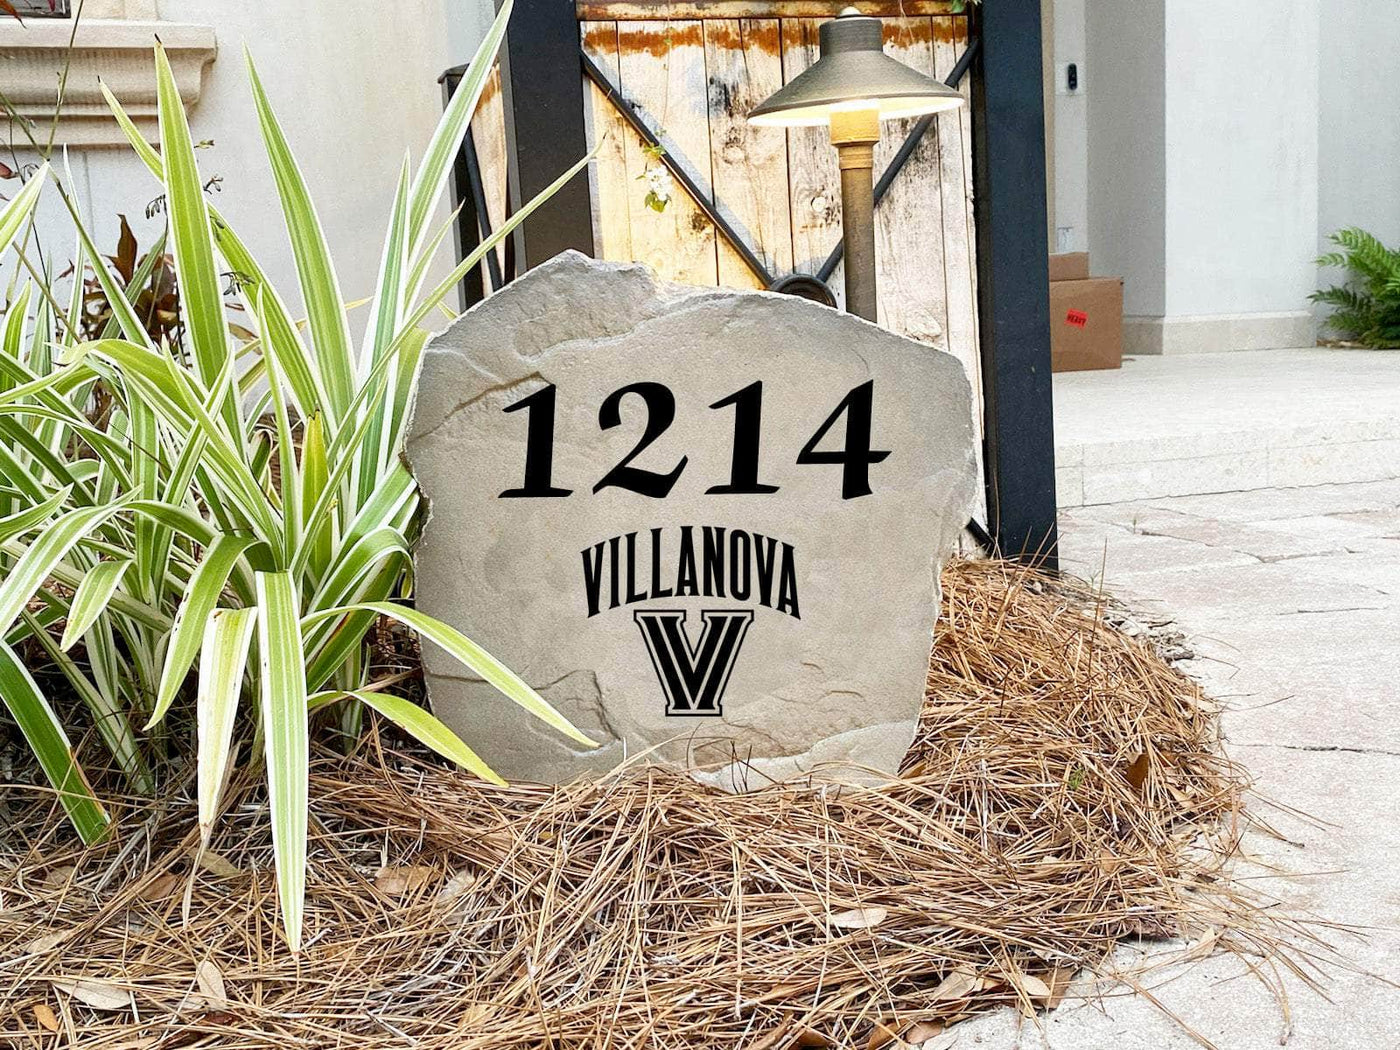 Villanova University Address Stone